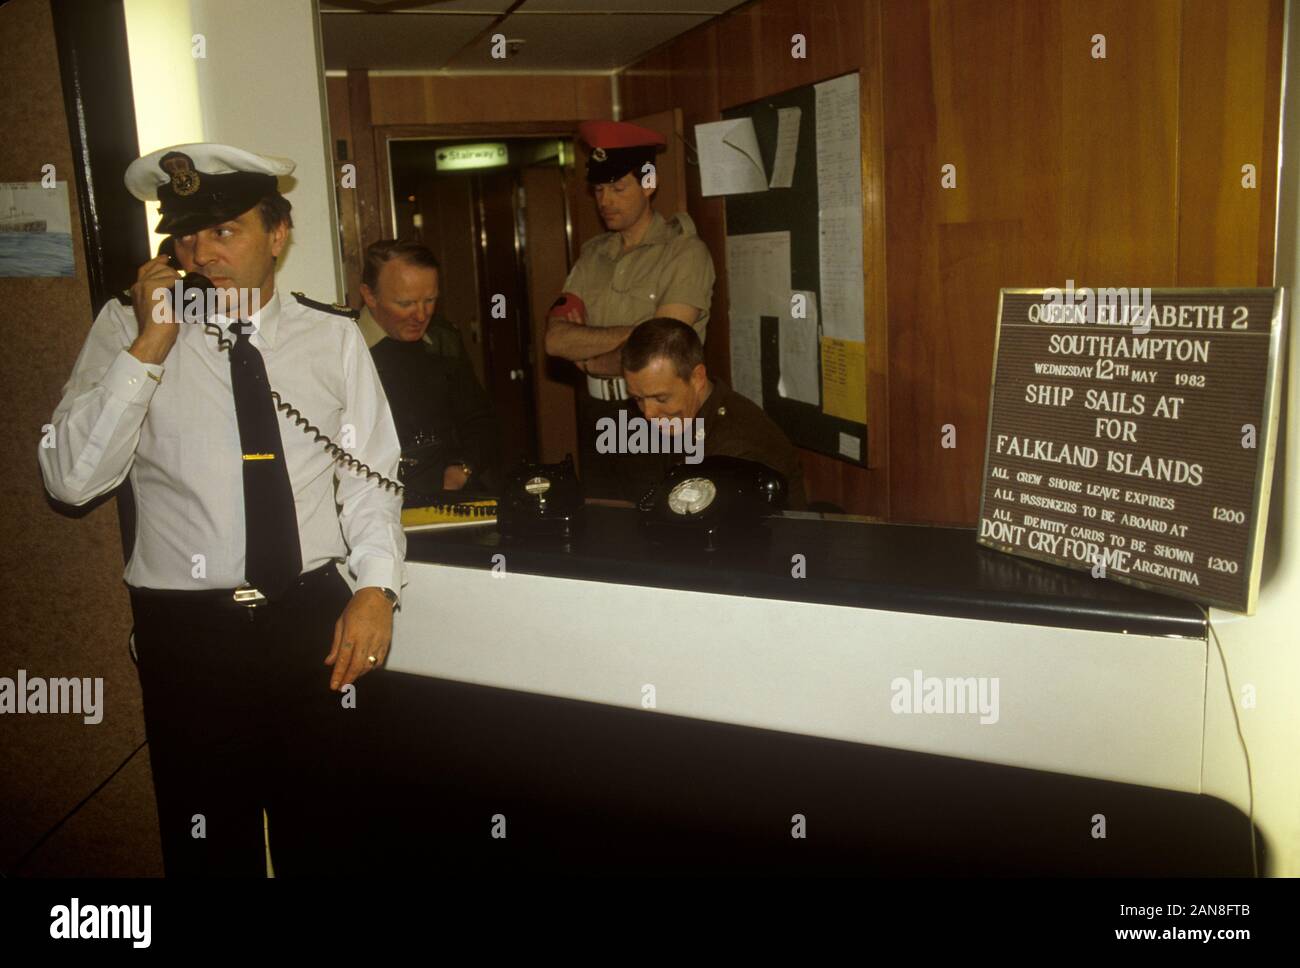 Guerra delle Falklands. QE2 bacheca Southampton Dock mercoledì 12 maggio 1982. La regina Elisabetta 11 vele per le Falkland. Anni ottanta UK HOMER SYKES Foto Stock